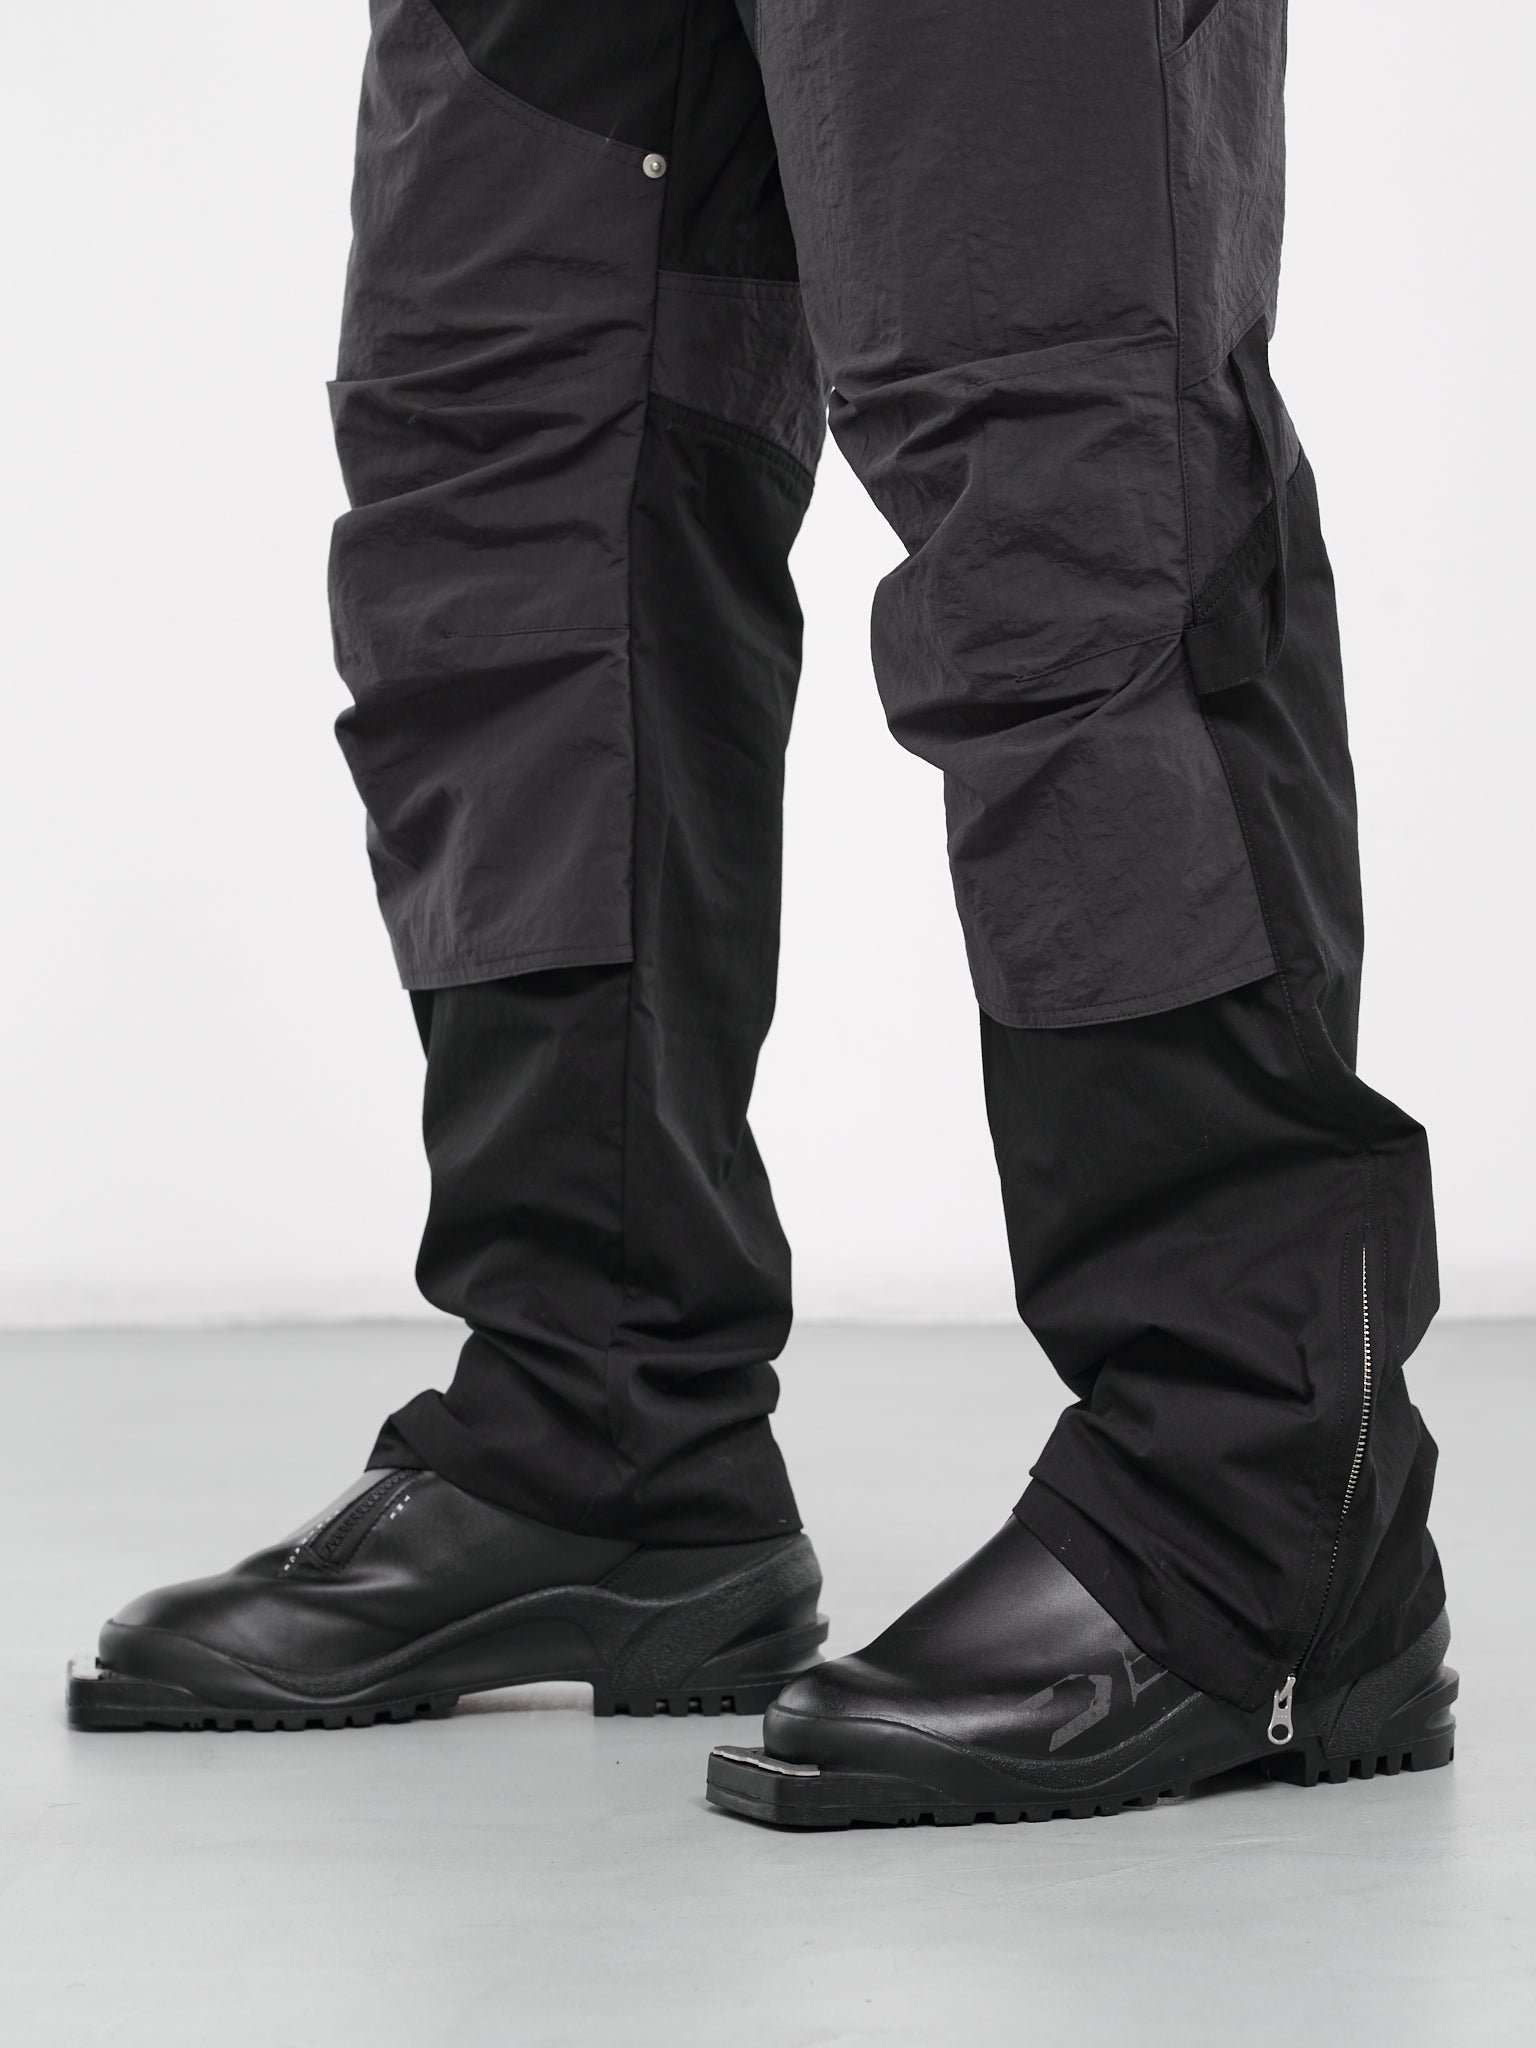 Reinforced Panel Pants (MP-05-BLACK)